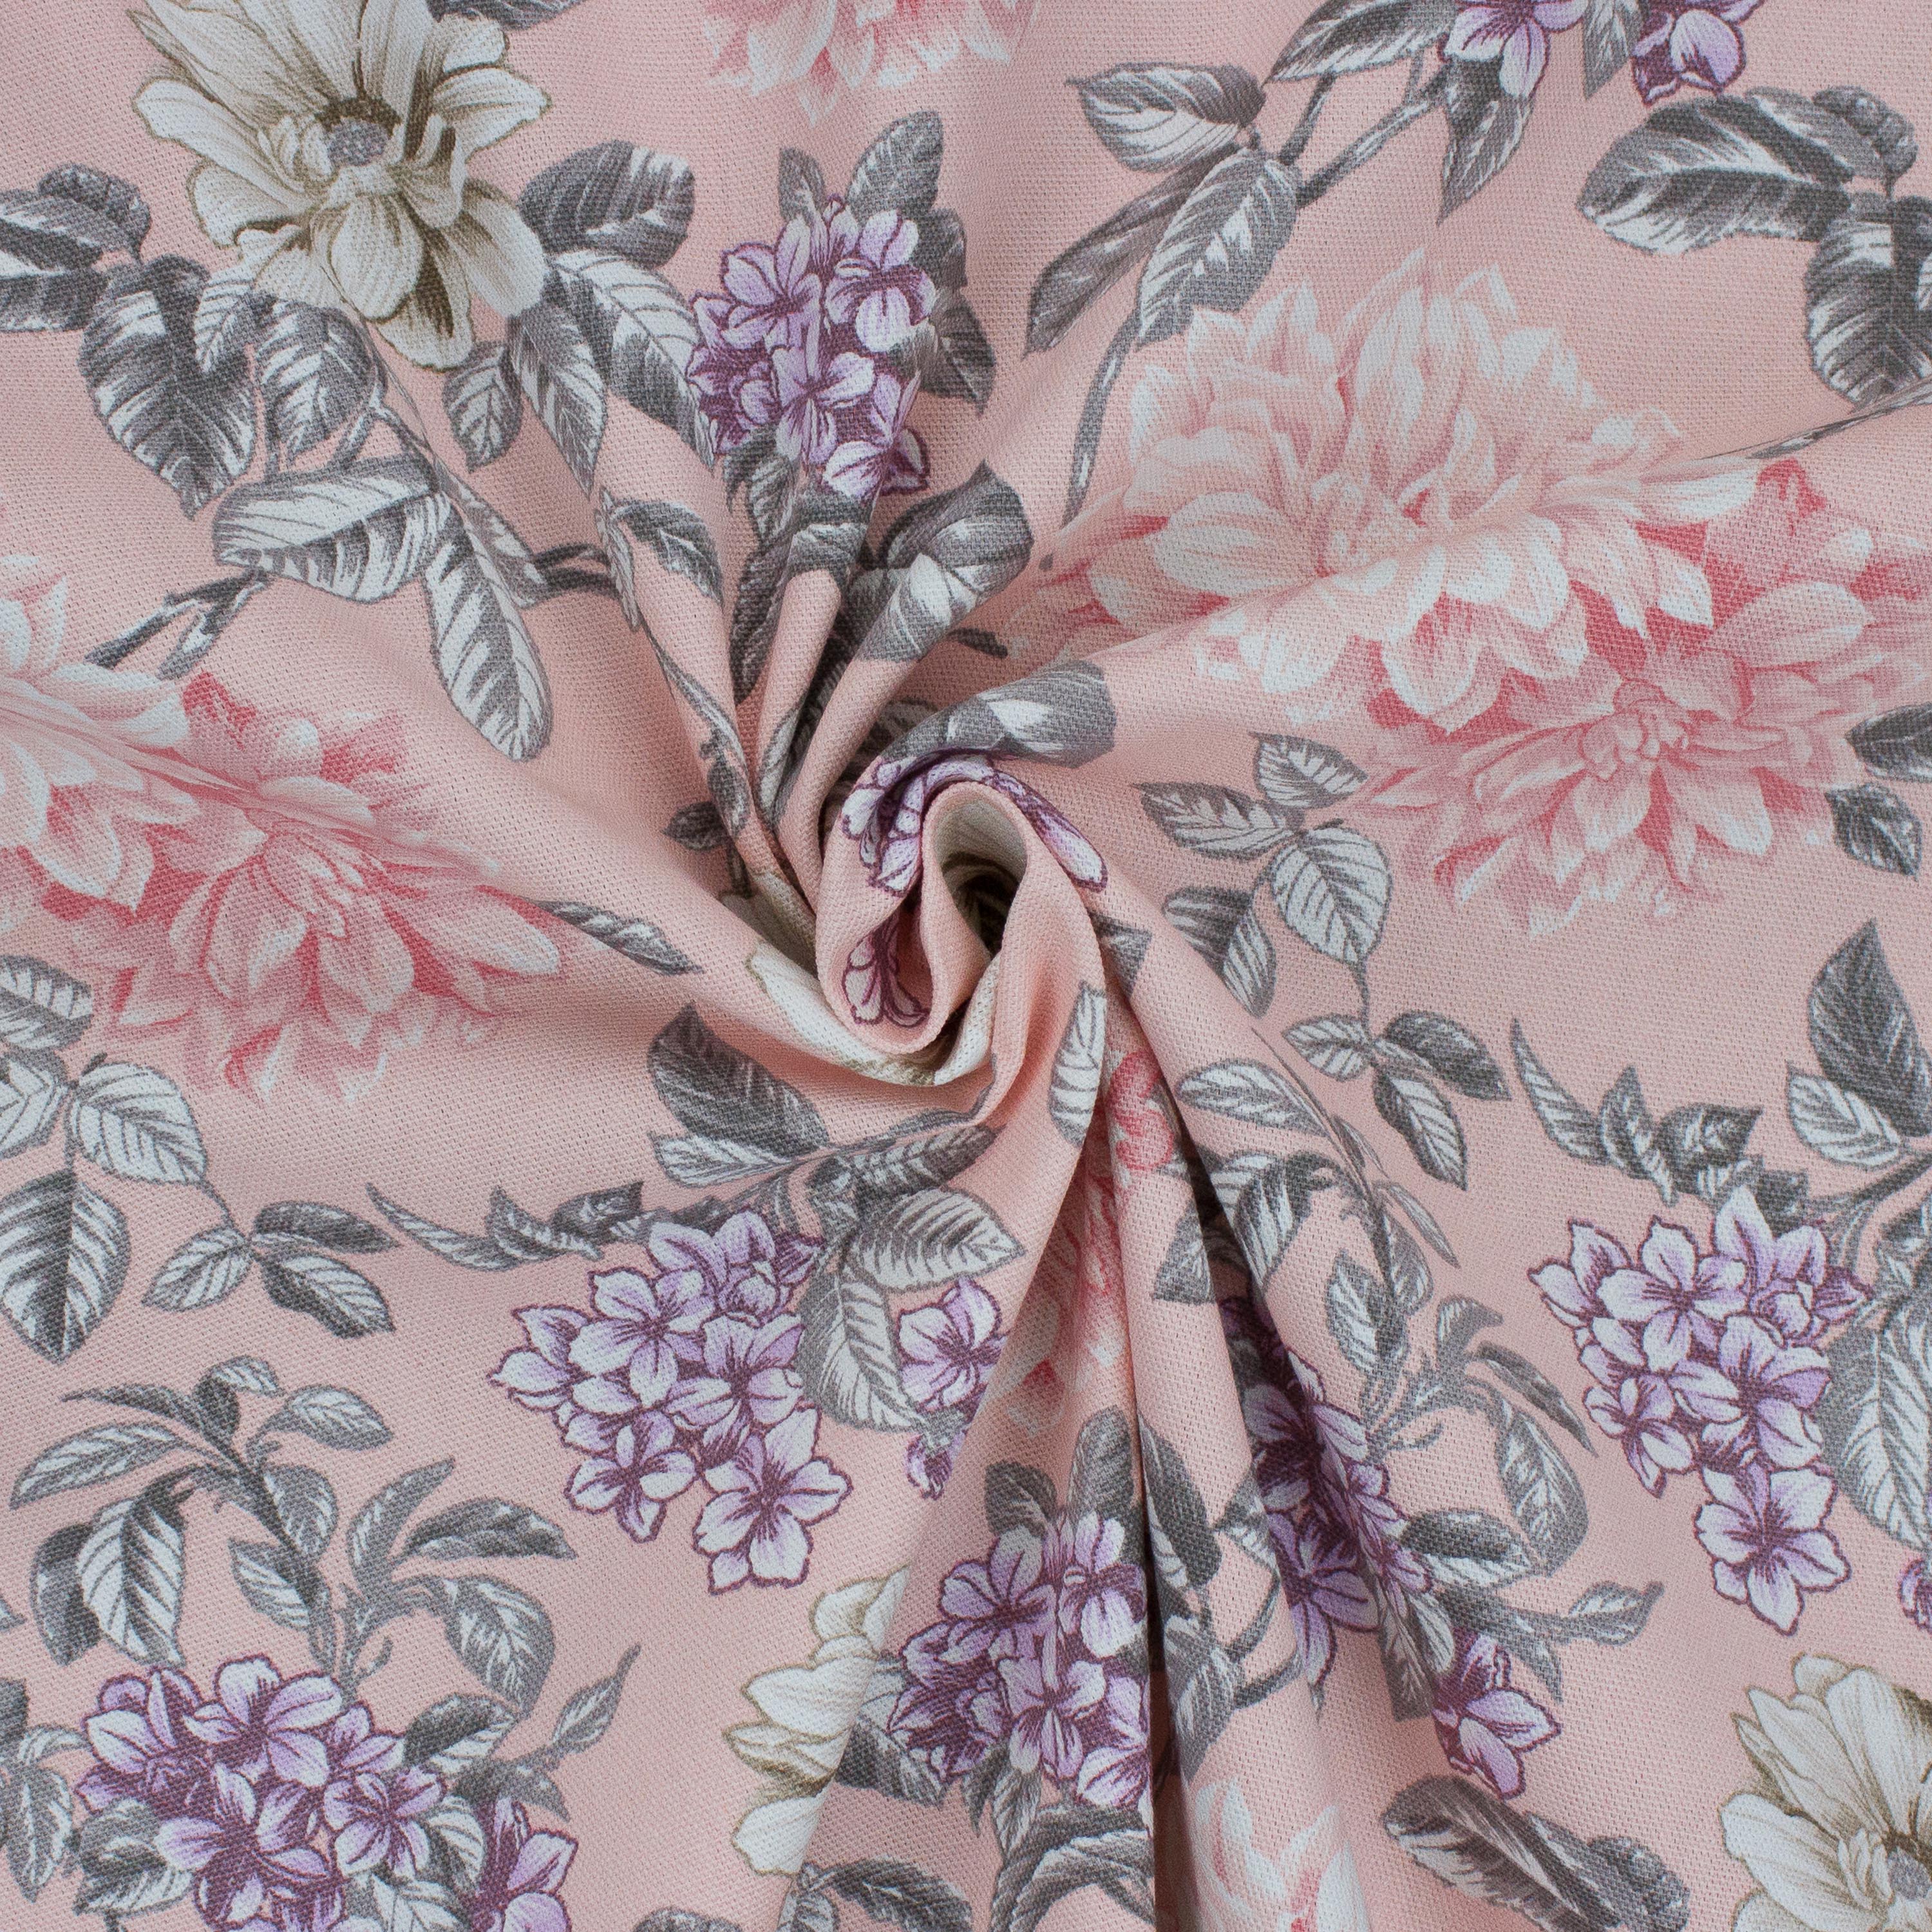 Better Homes & Gardens 100% Cotton Flower Garden Blush, 2 Yard Precut Fabric - image 5 of 6